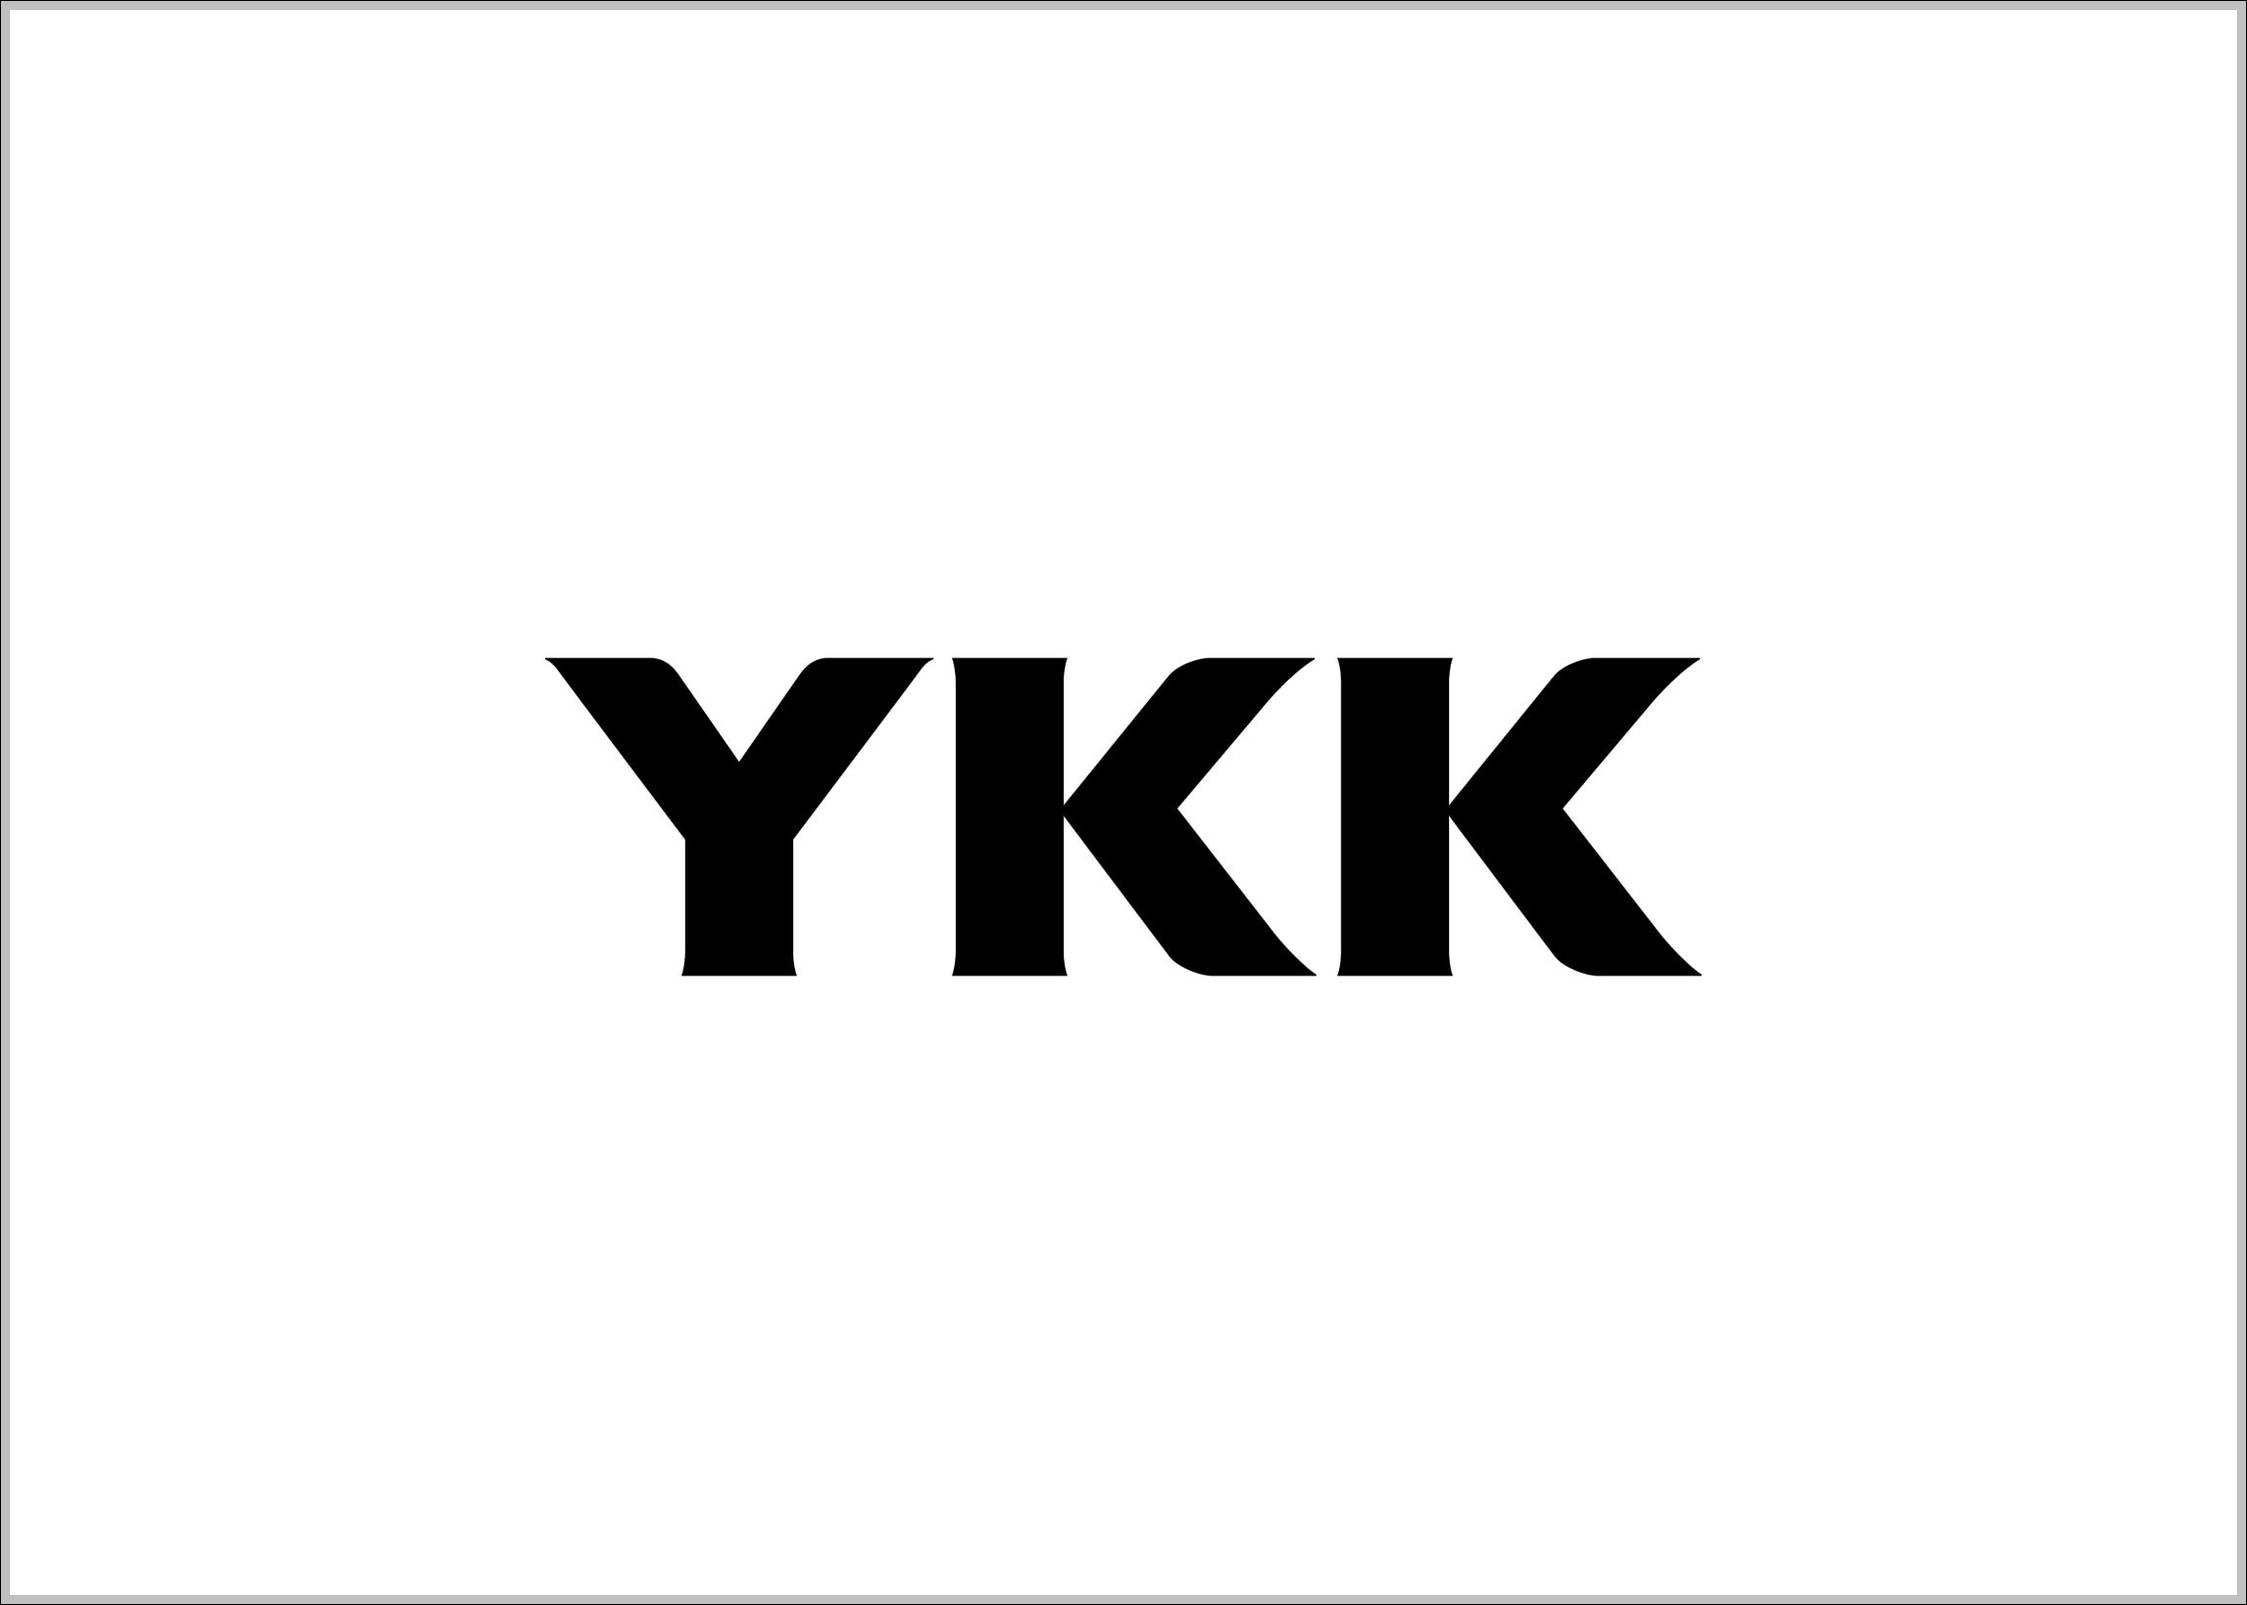 YKK logo